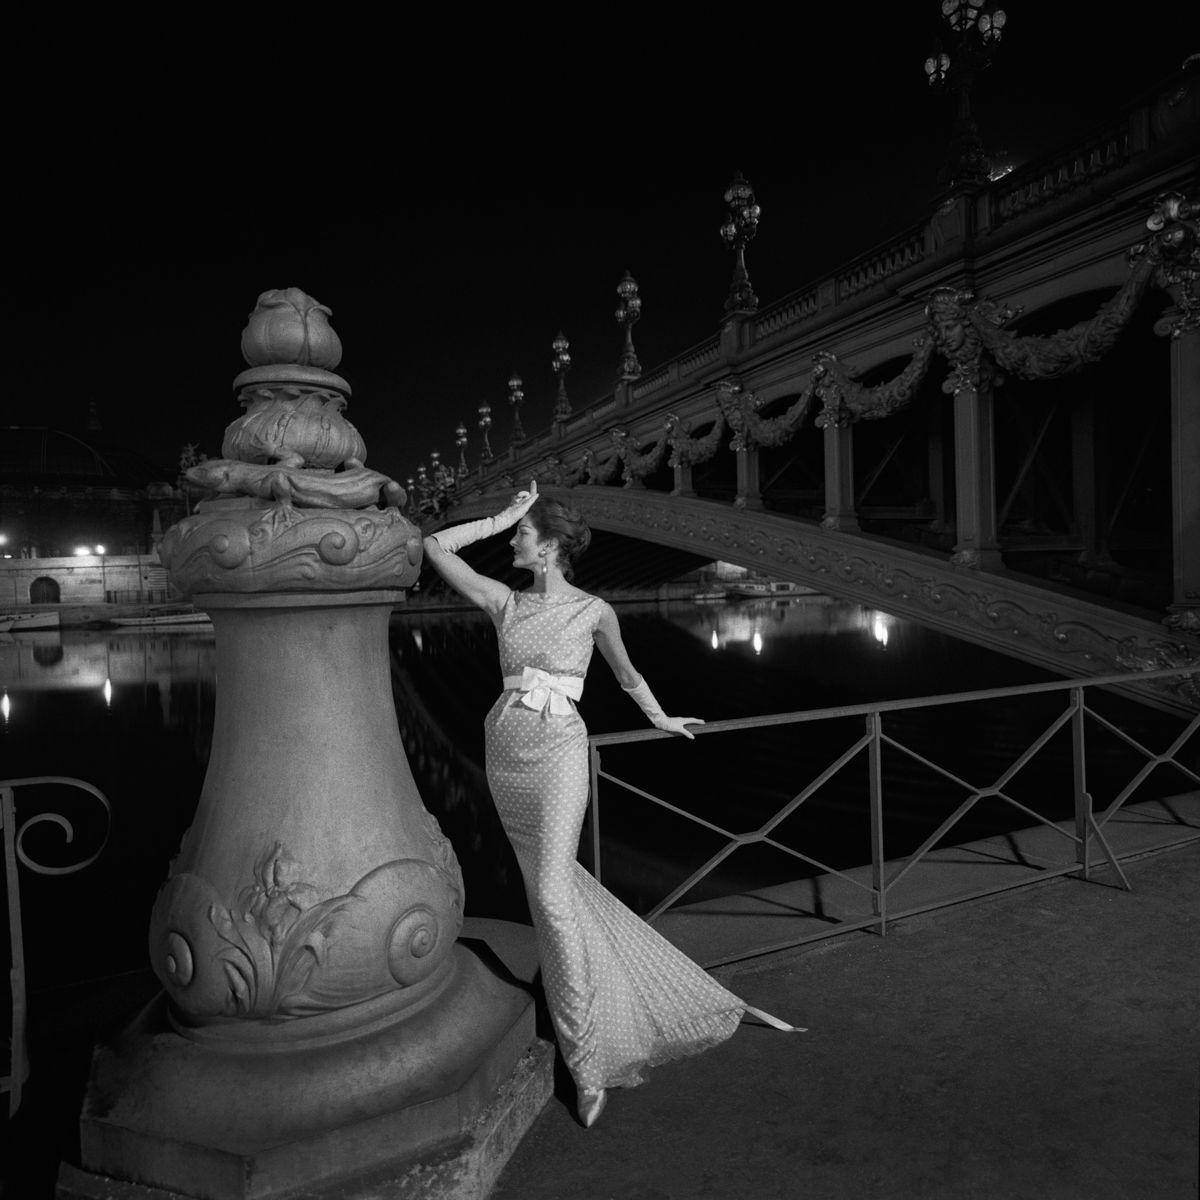 Gleb Derujinsky Figurative Photograph - Balmain's Mermaid, A Night in Paris